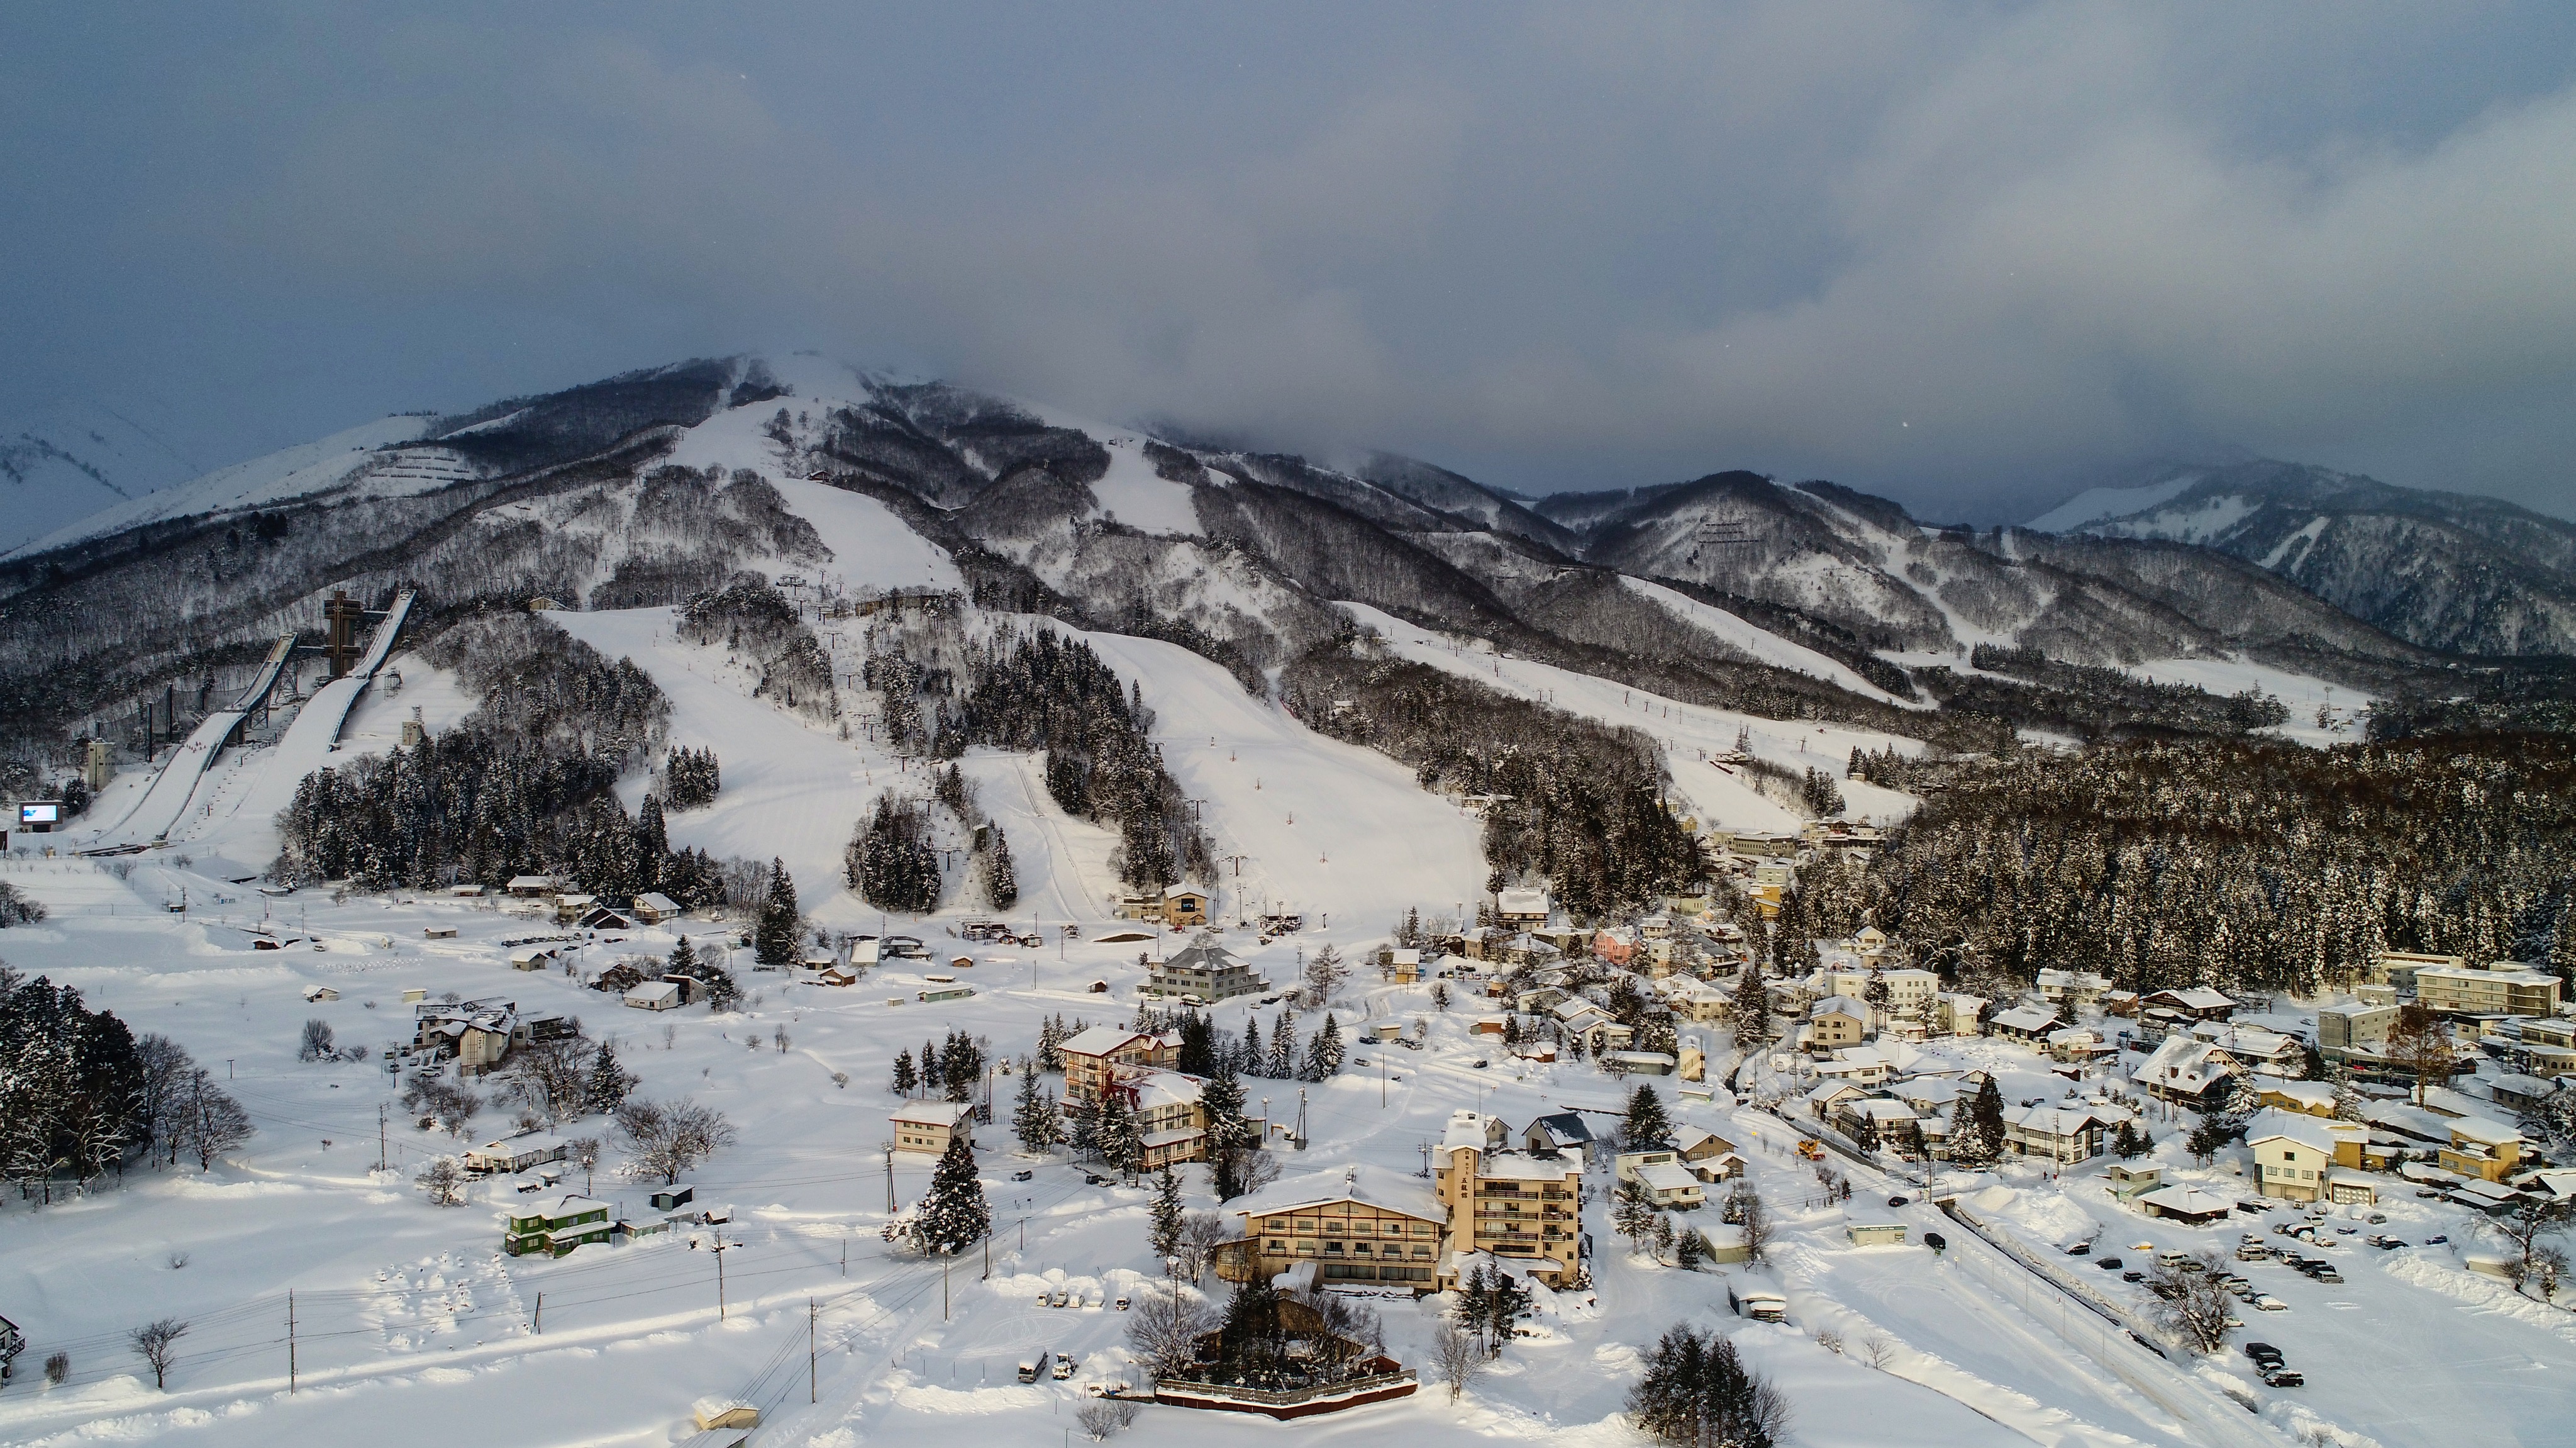 The snow-covered Hakuba Village